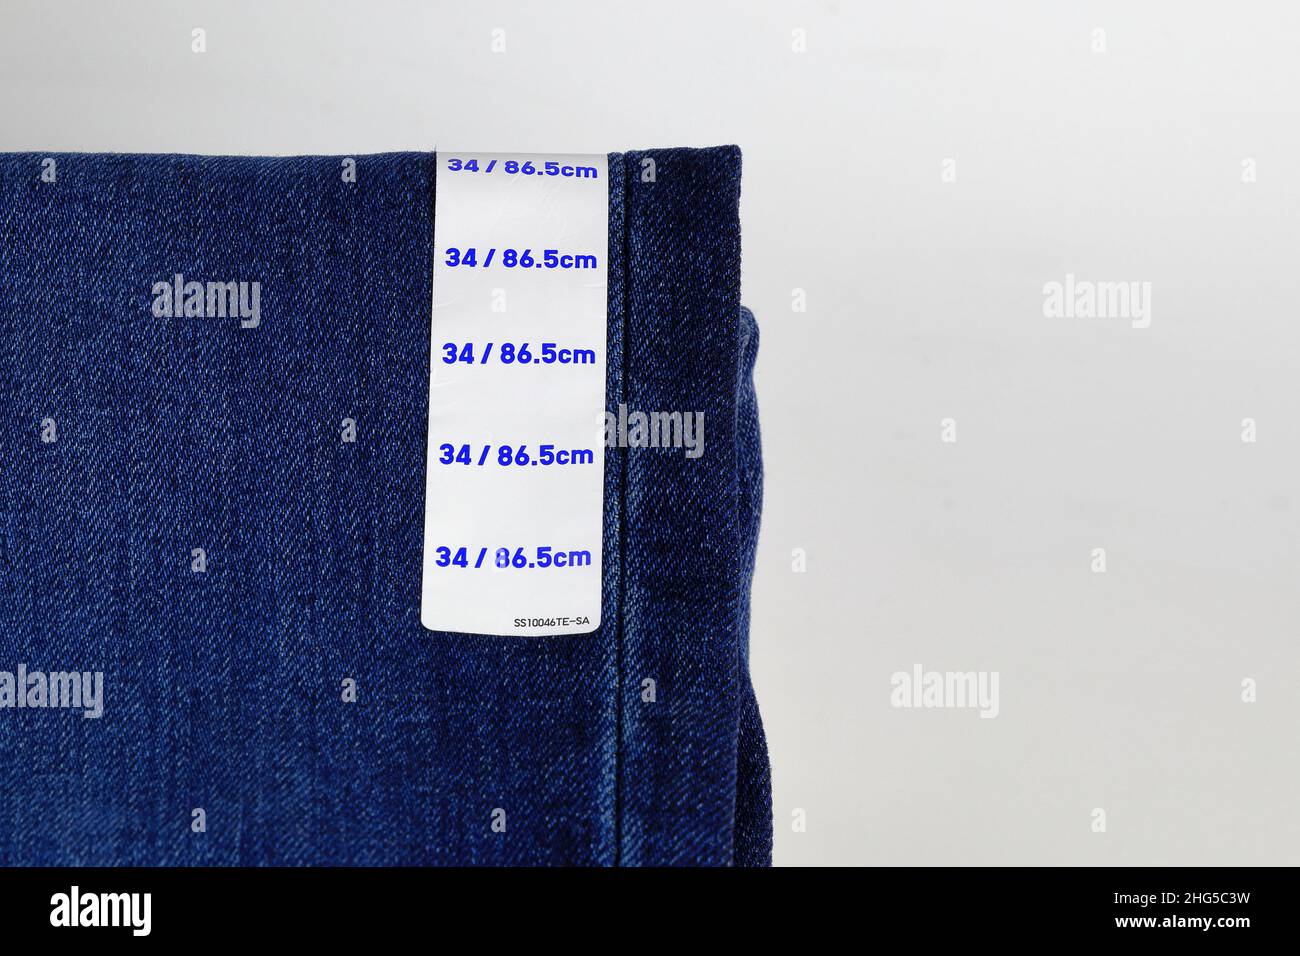 Blue jeans denim with label size, collection jeans stacked with label size, size tag on Blue jeans denim pants. Stock Photo